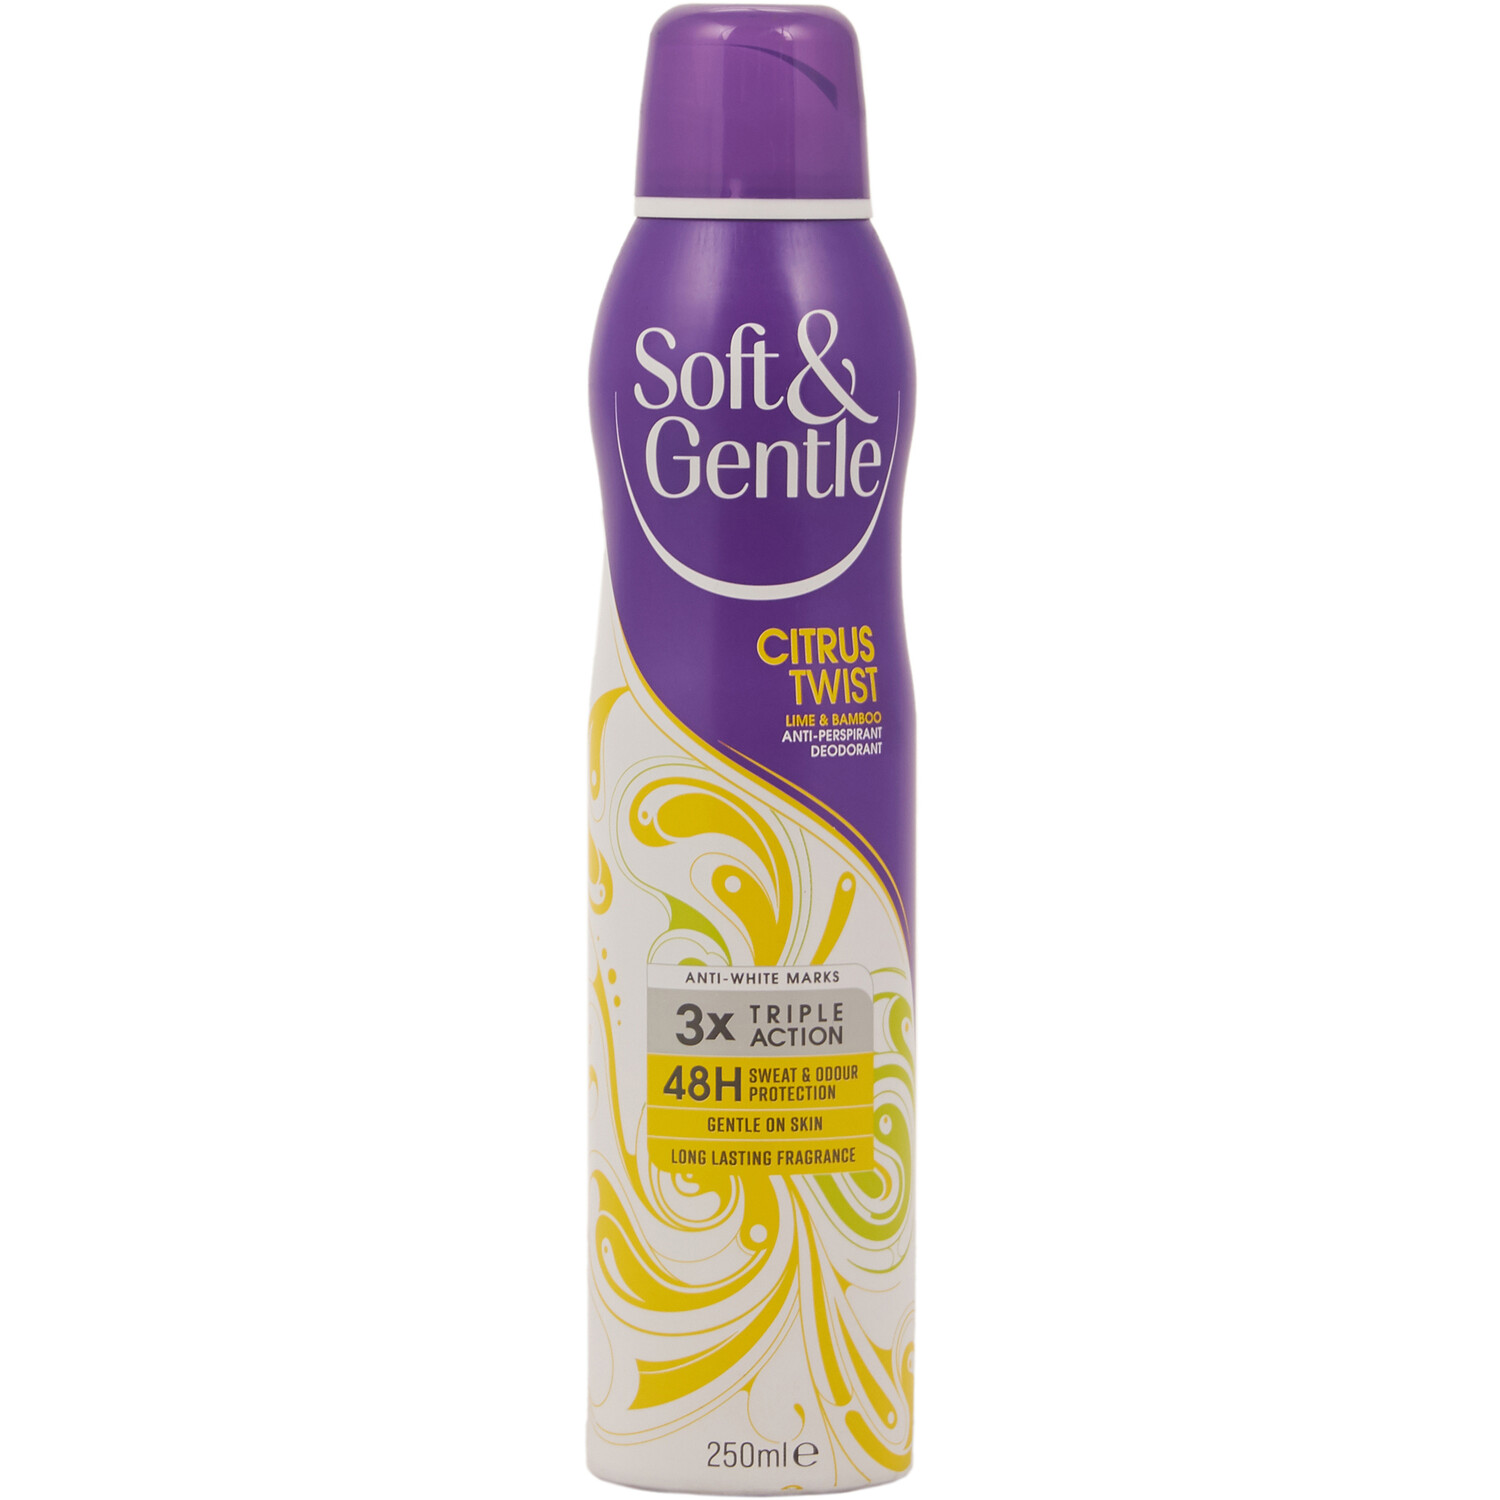 Soft & Gentle Citrus Twist Anti-Perspirant Deodorant Spray - Purple Image 1